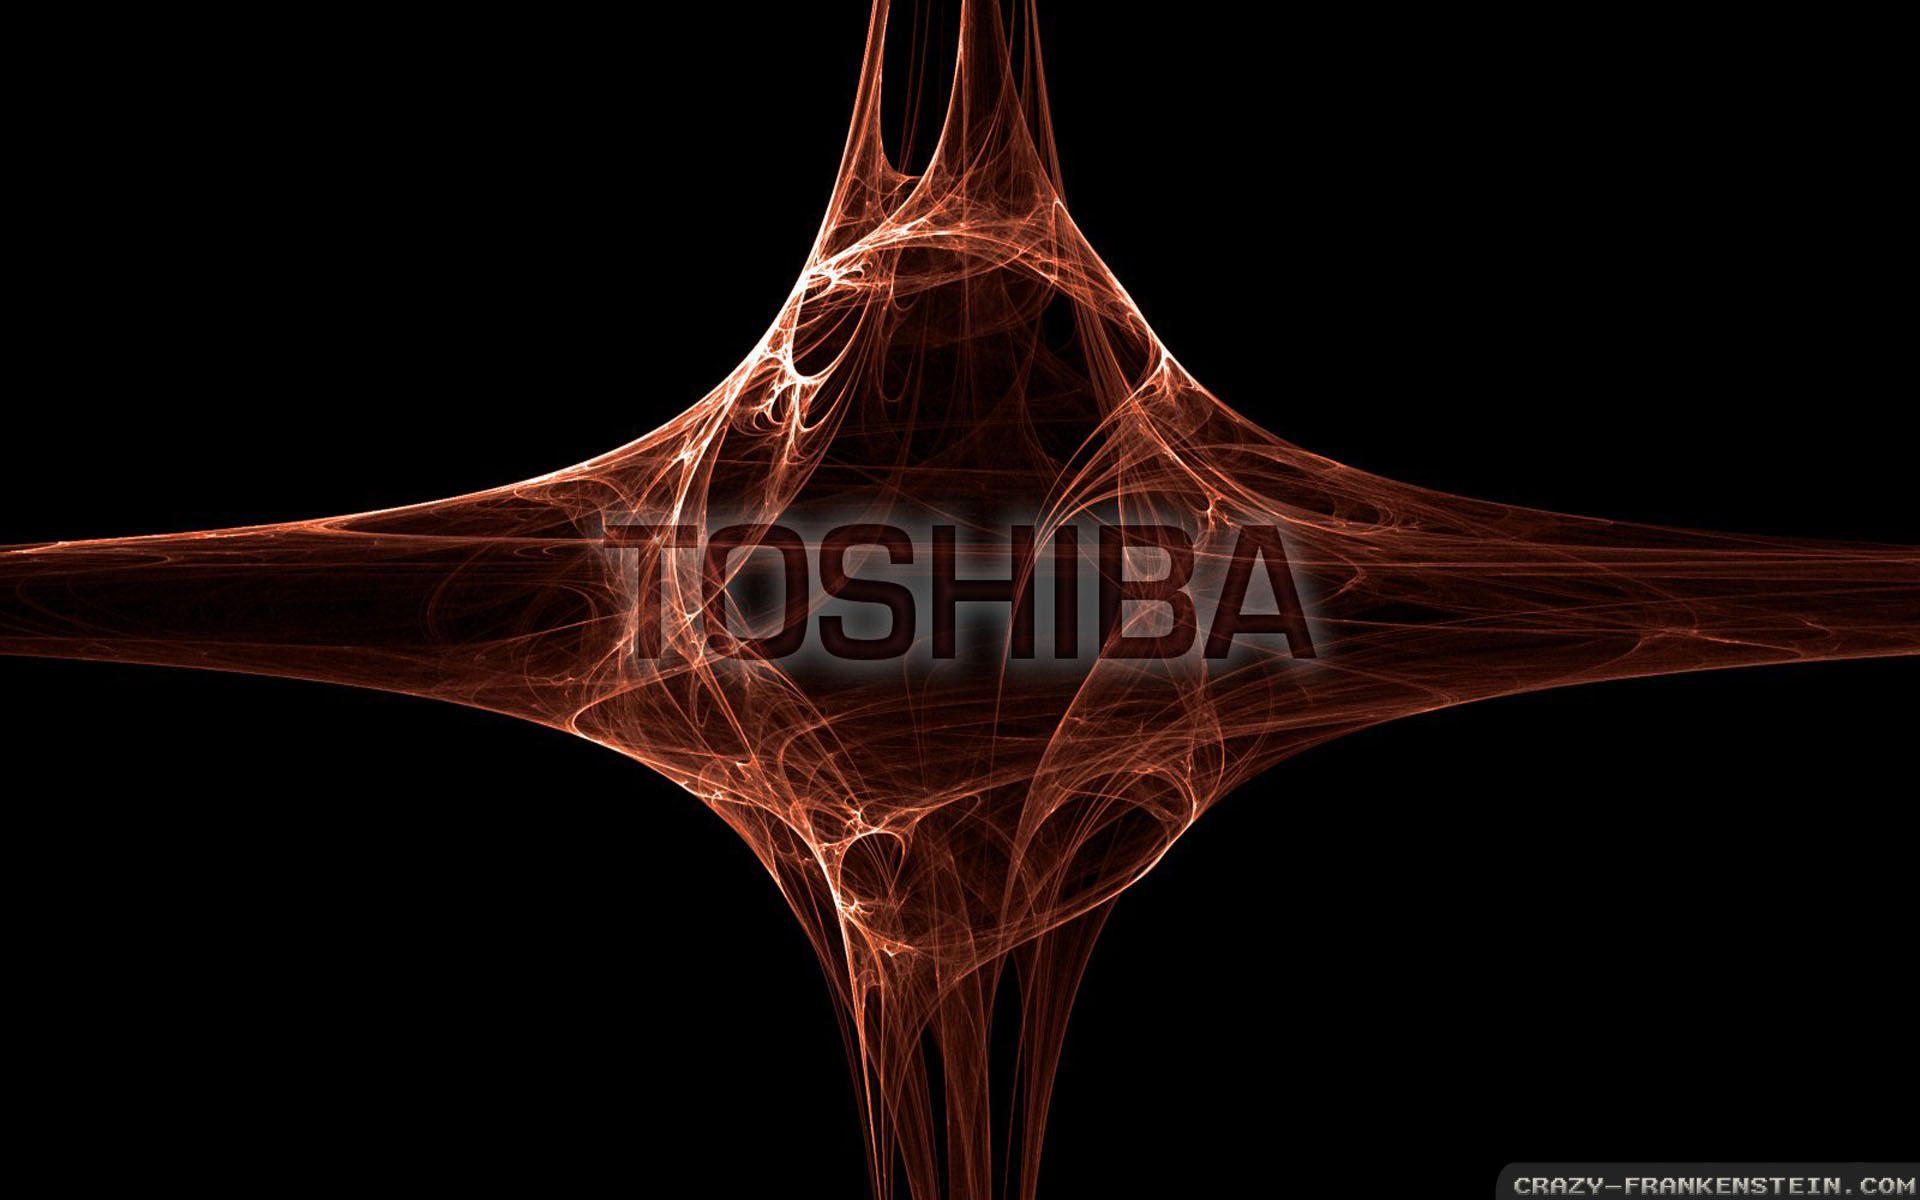 Toshiba wallpapers - Crazy Frankenstein